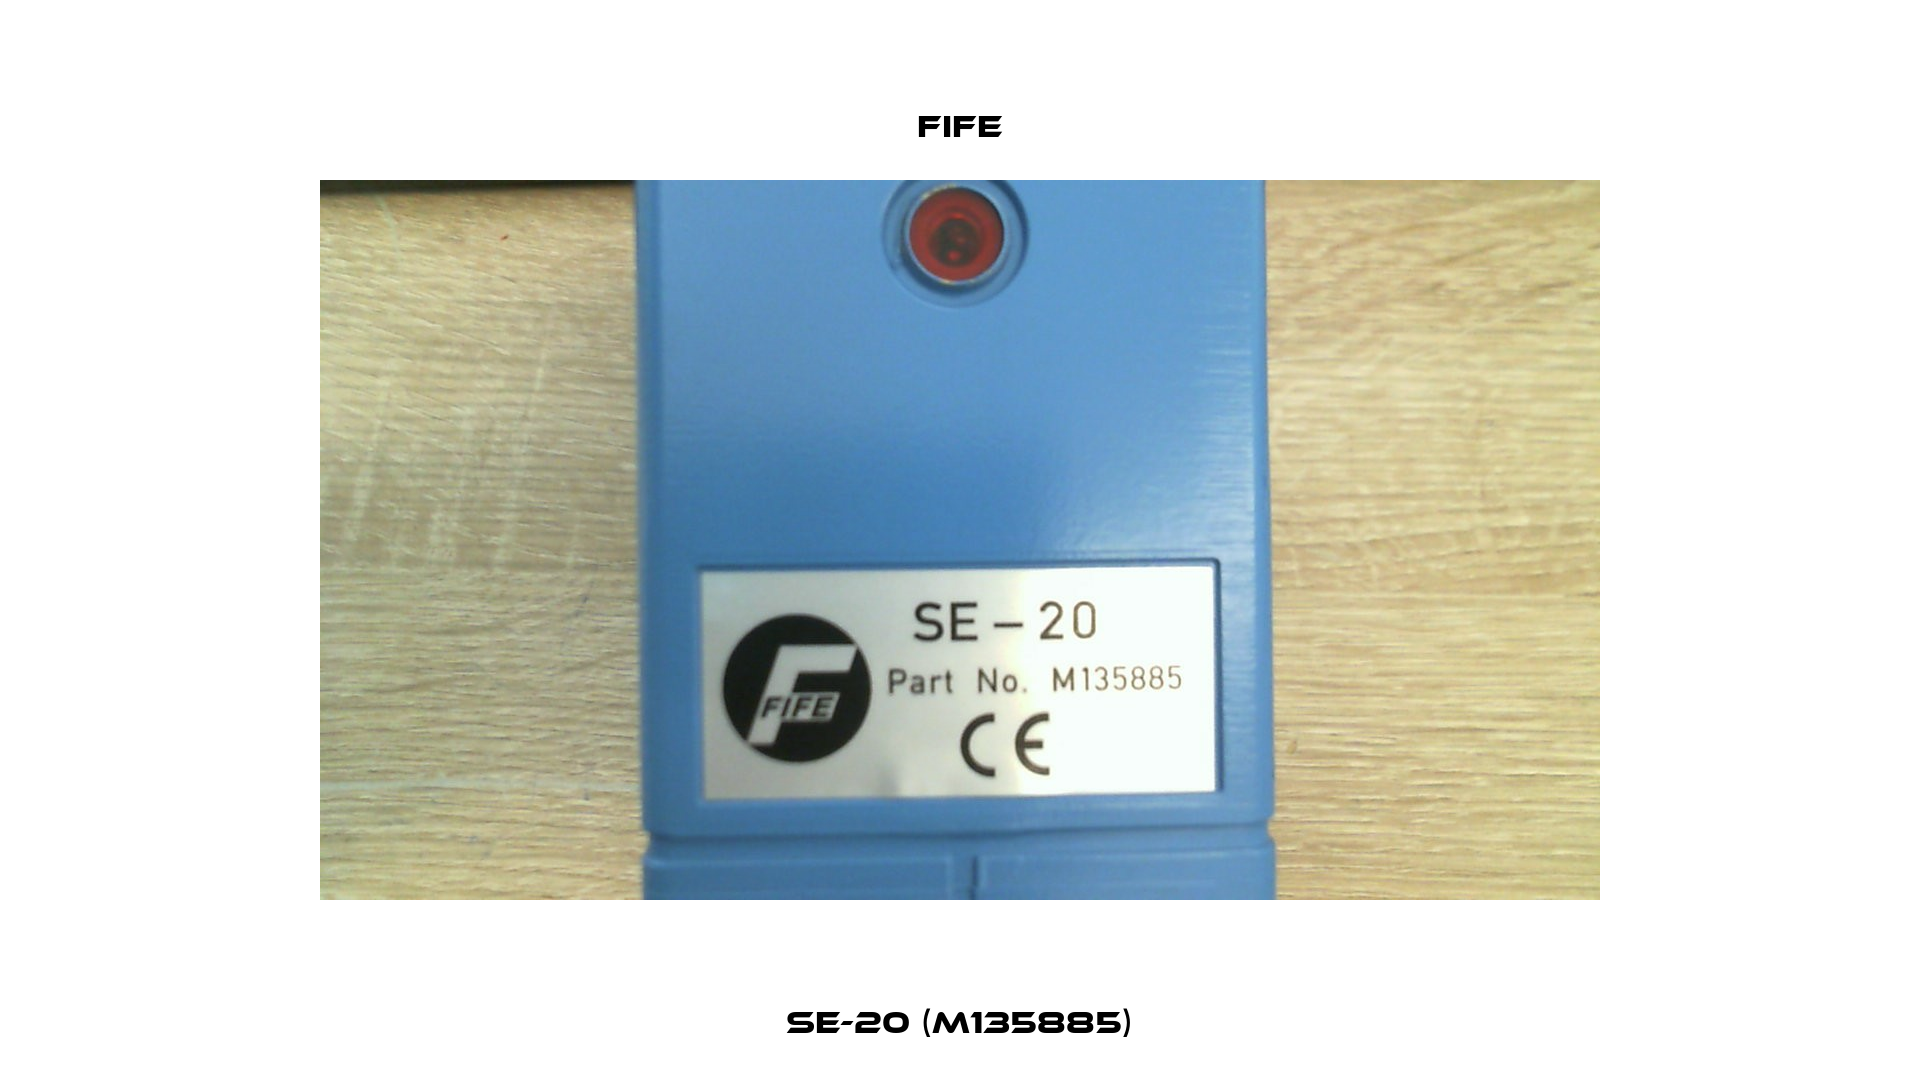 SE-20 (M135885) Fife